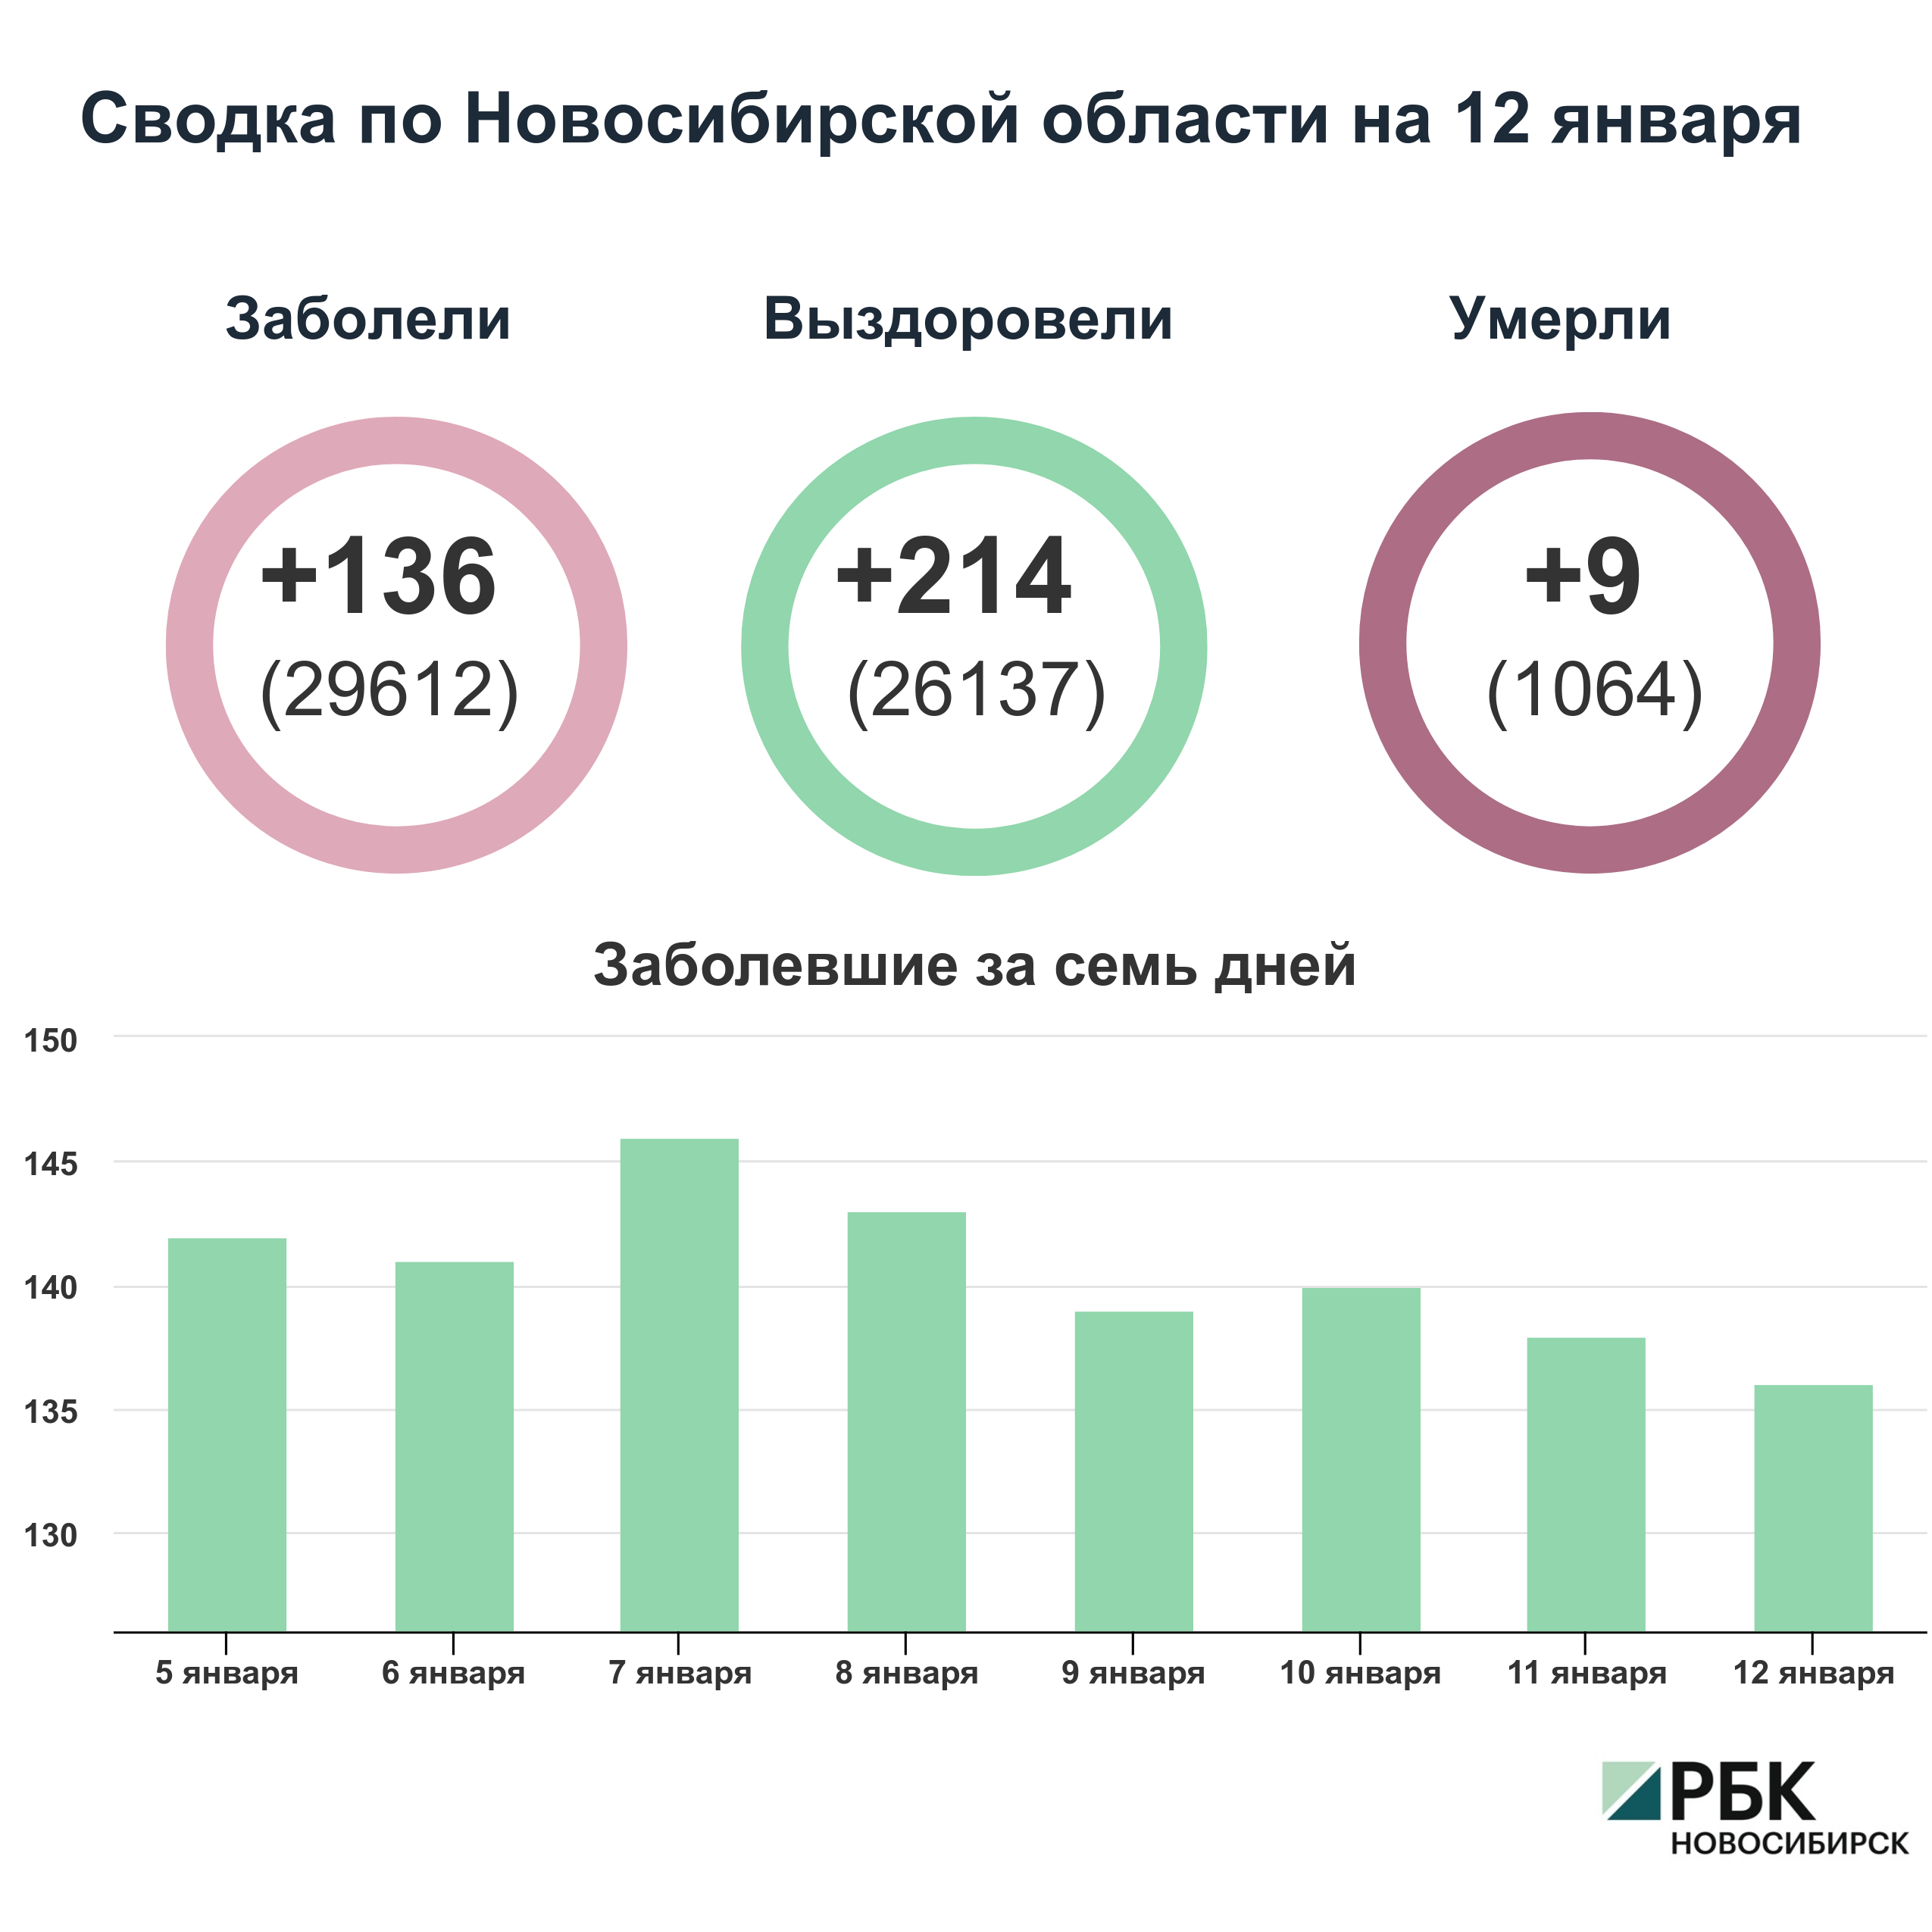 Коронавирус в Новосибирске: сводка на 12 января